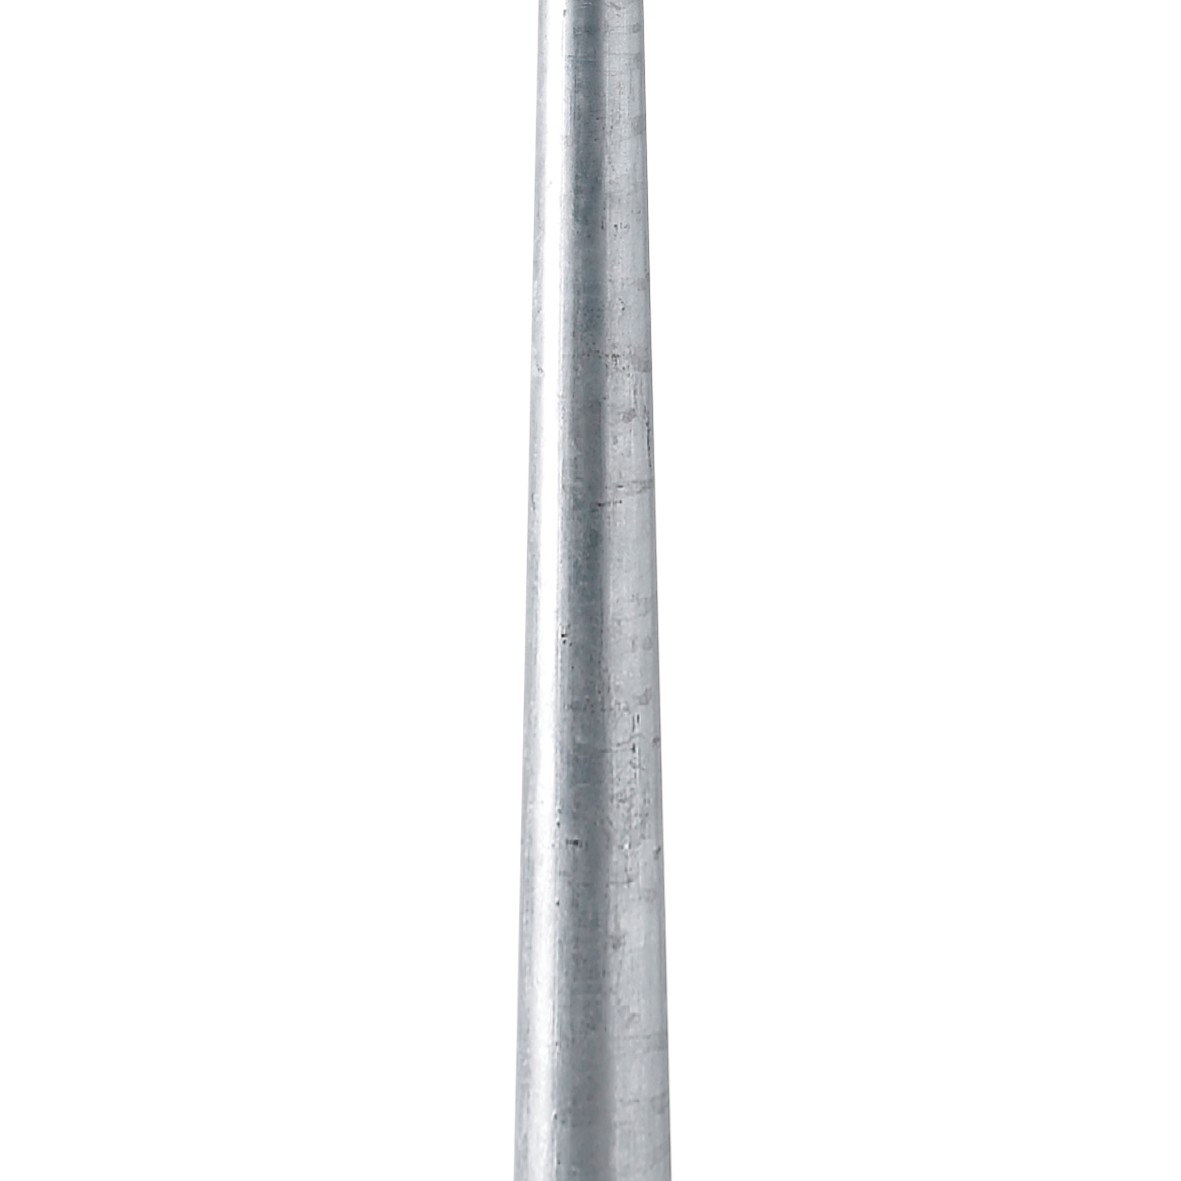 Wax Galvanized Pole conical 4m Steel